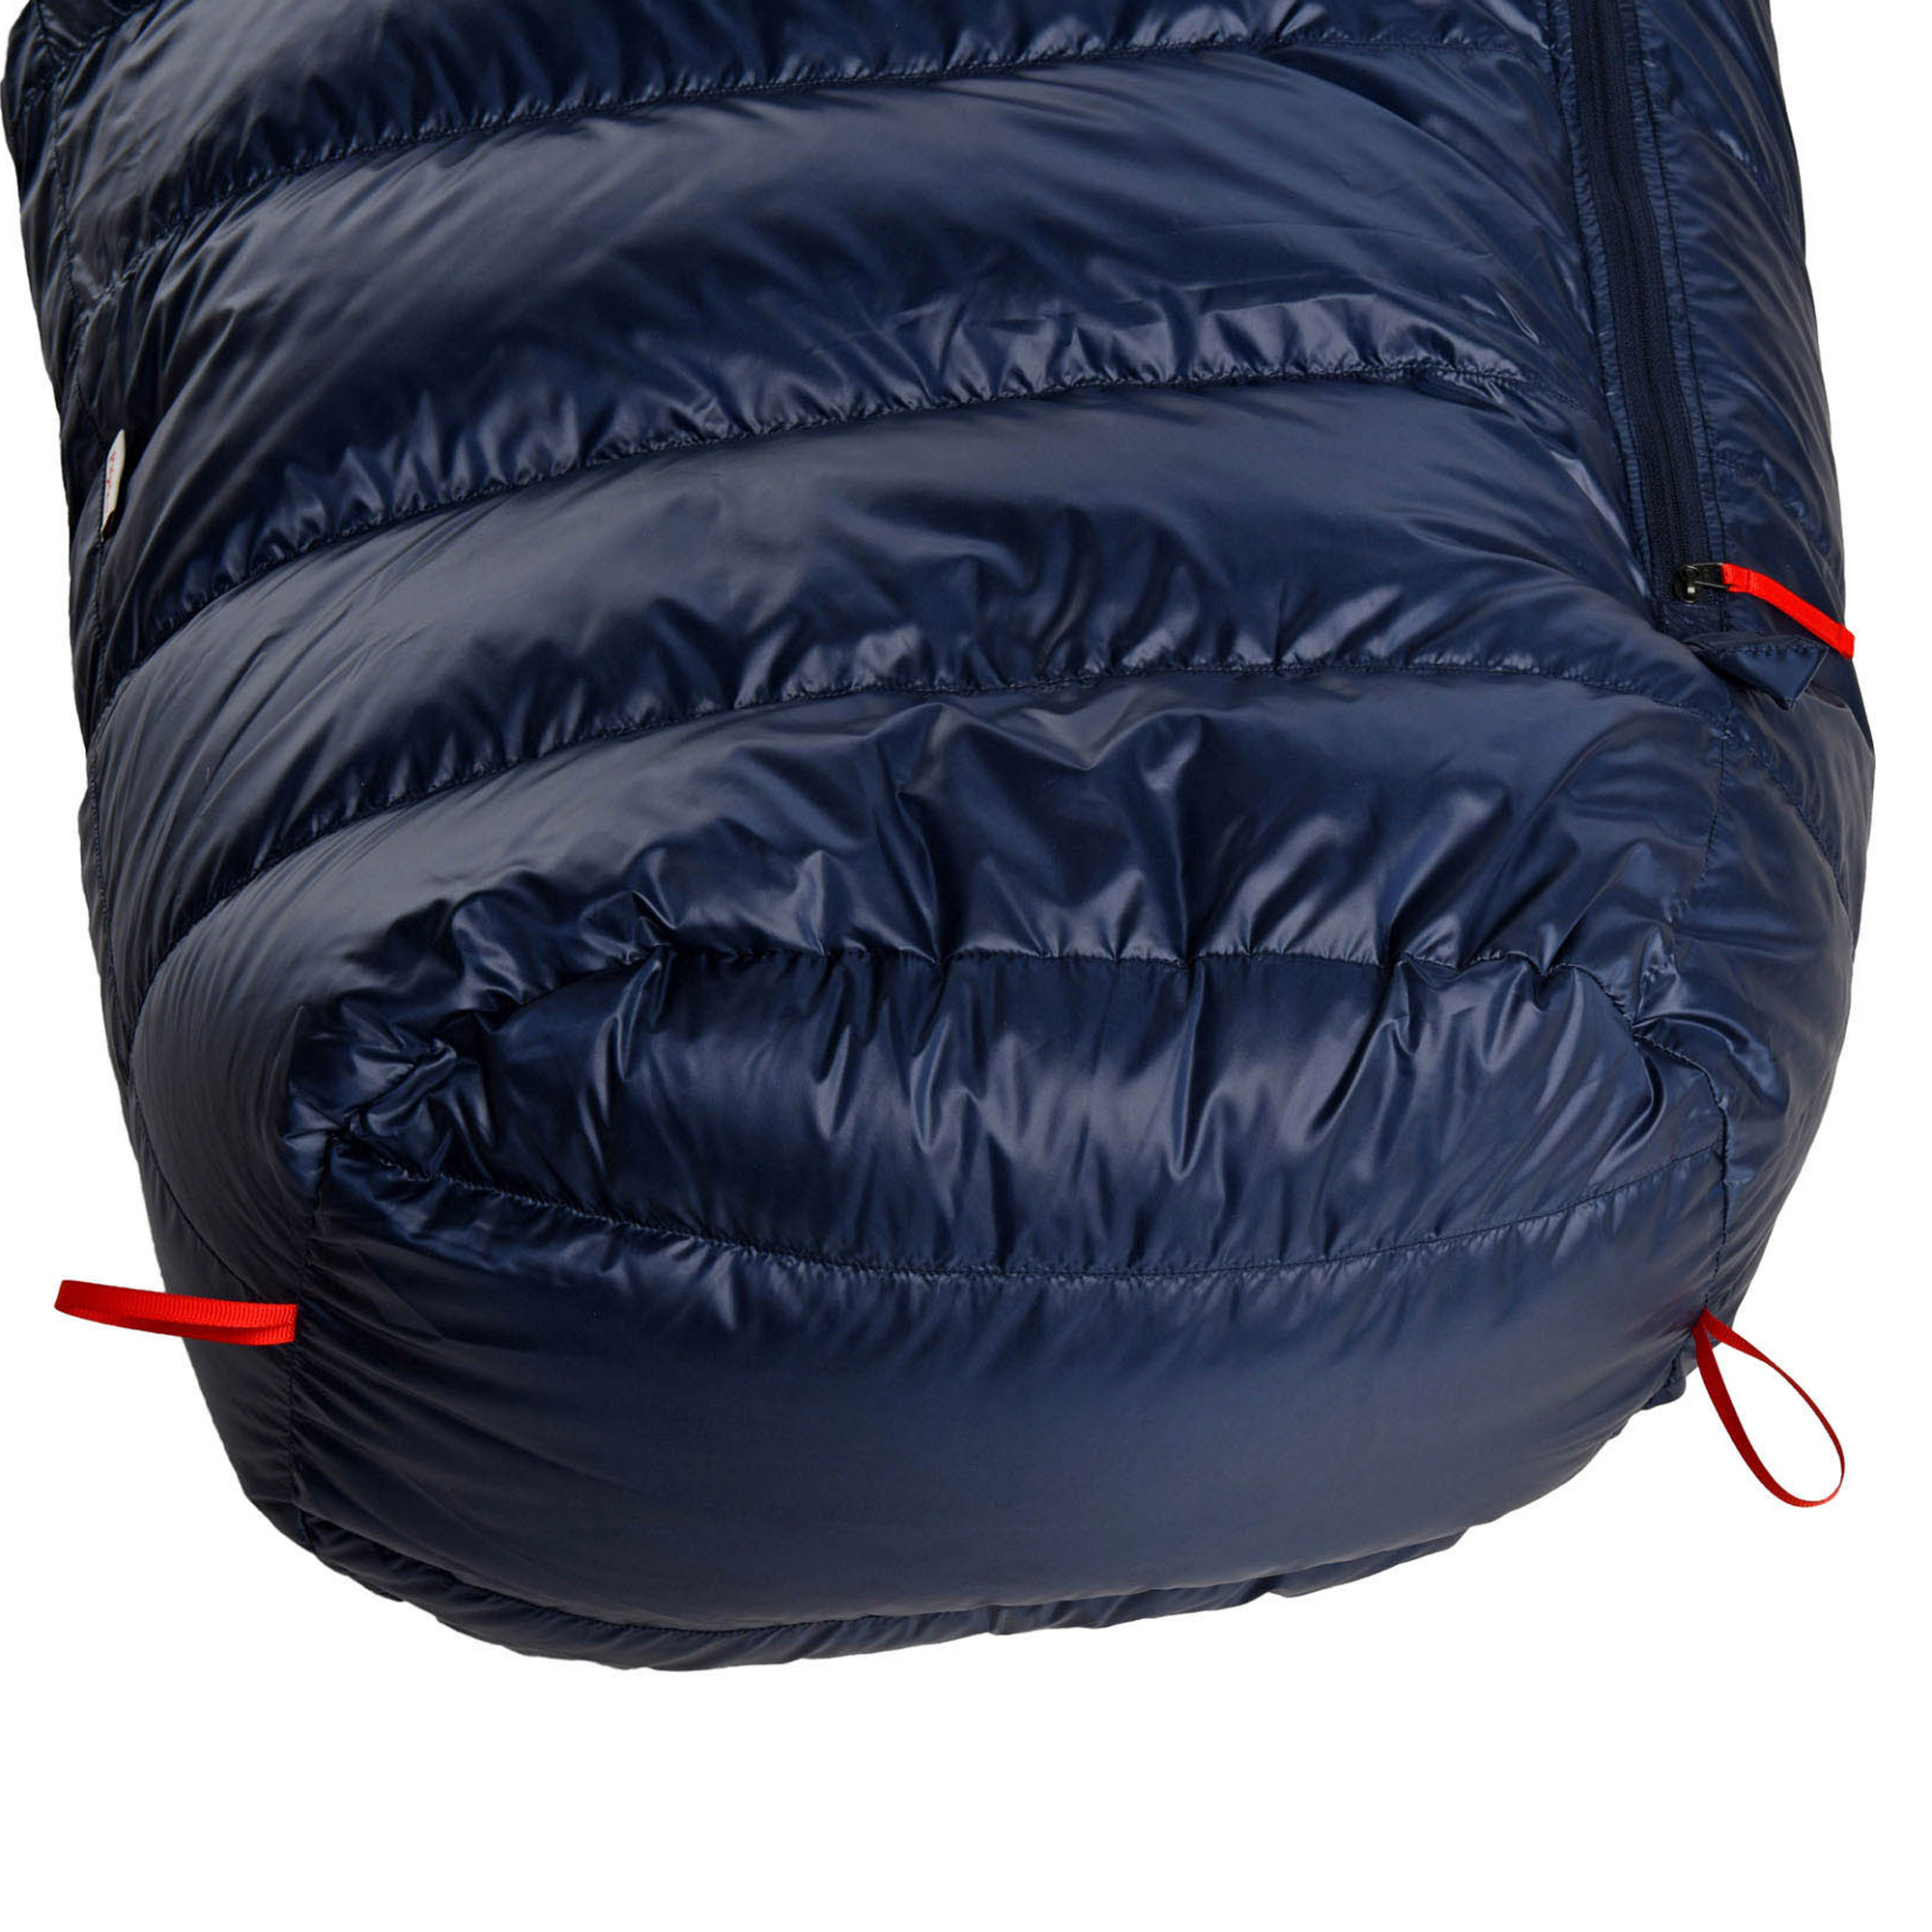 CORE, 950 sleeping bag, long, navy